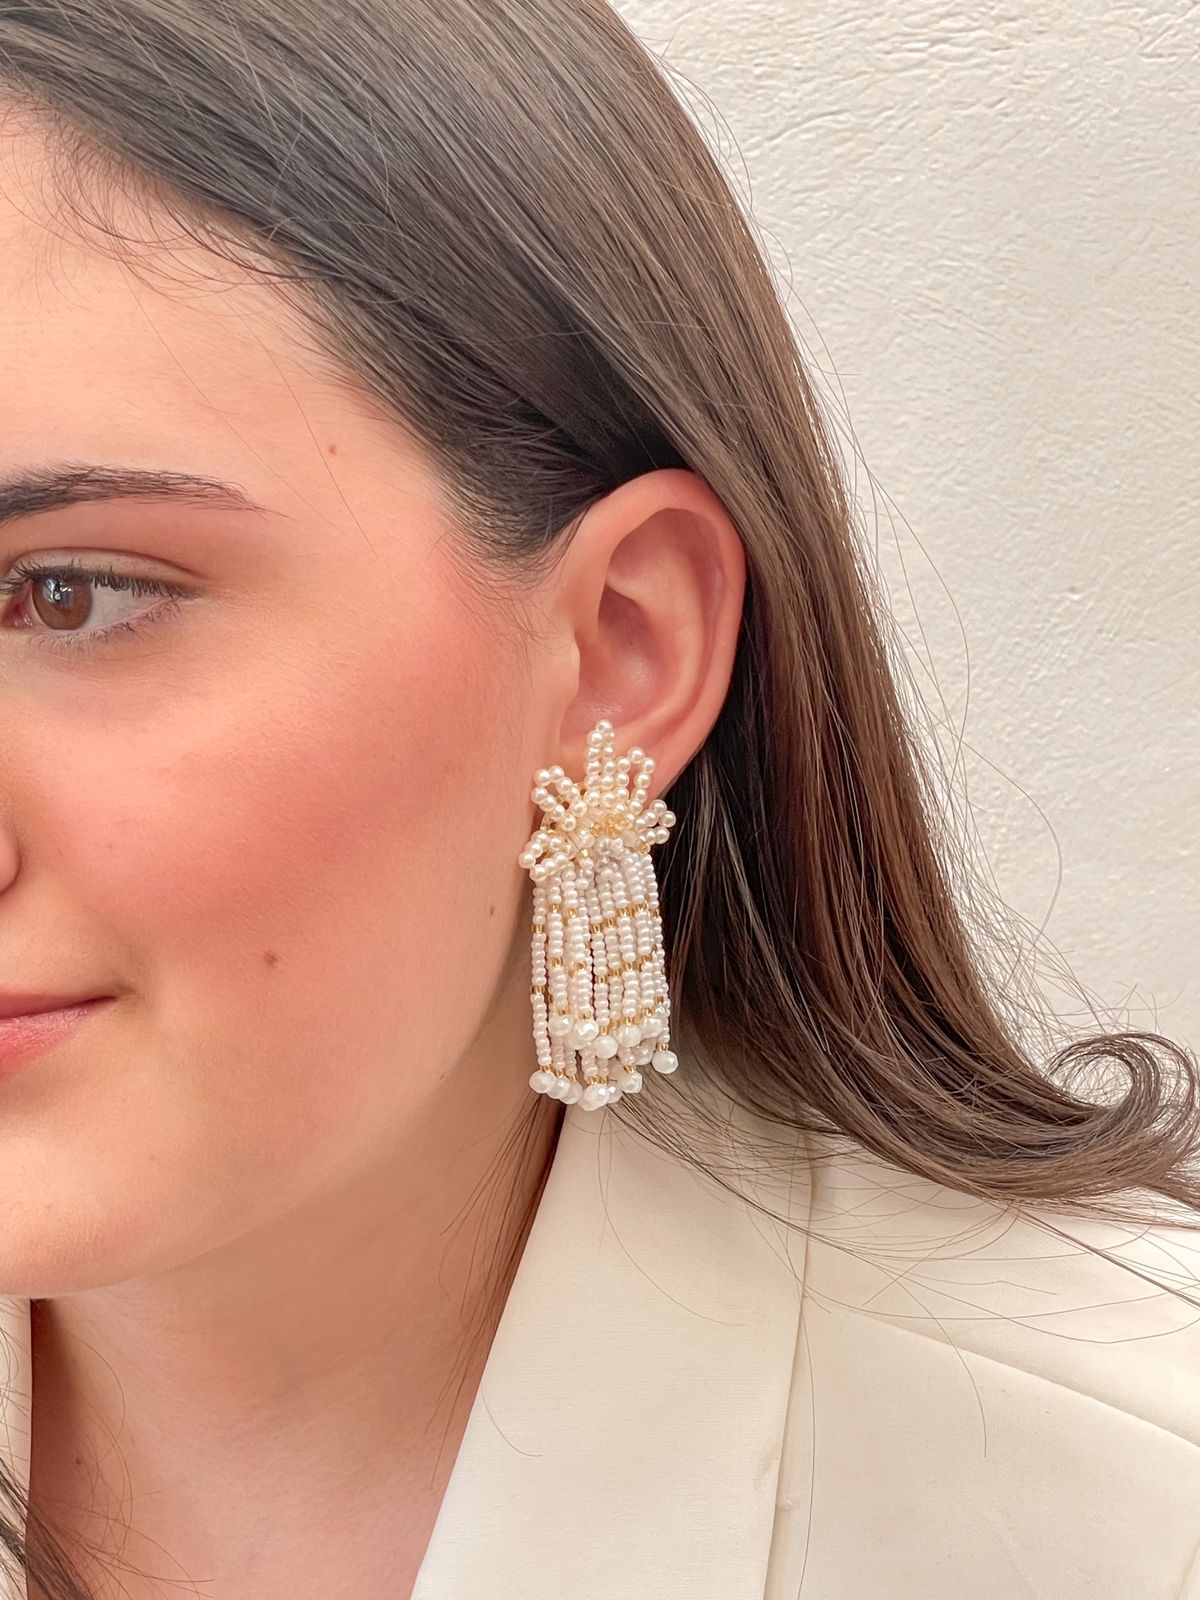 White Xmas earrings